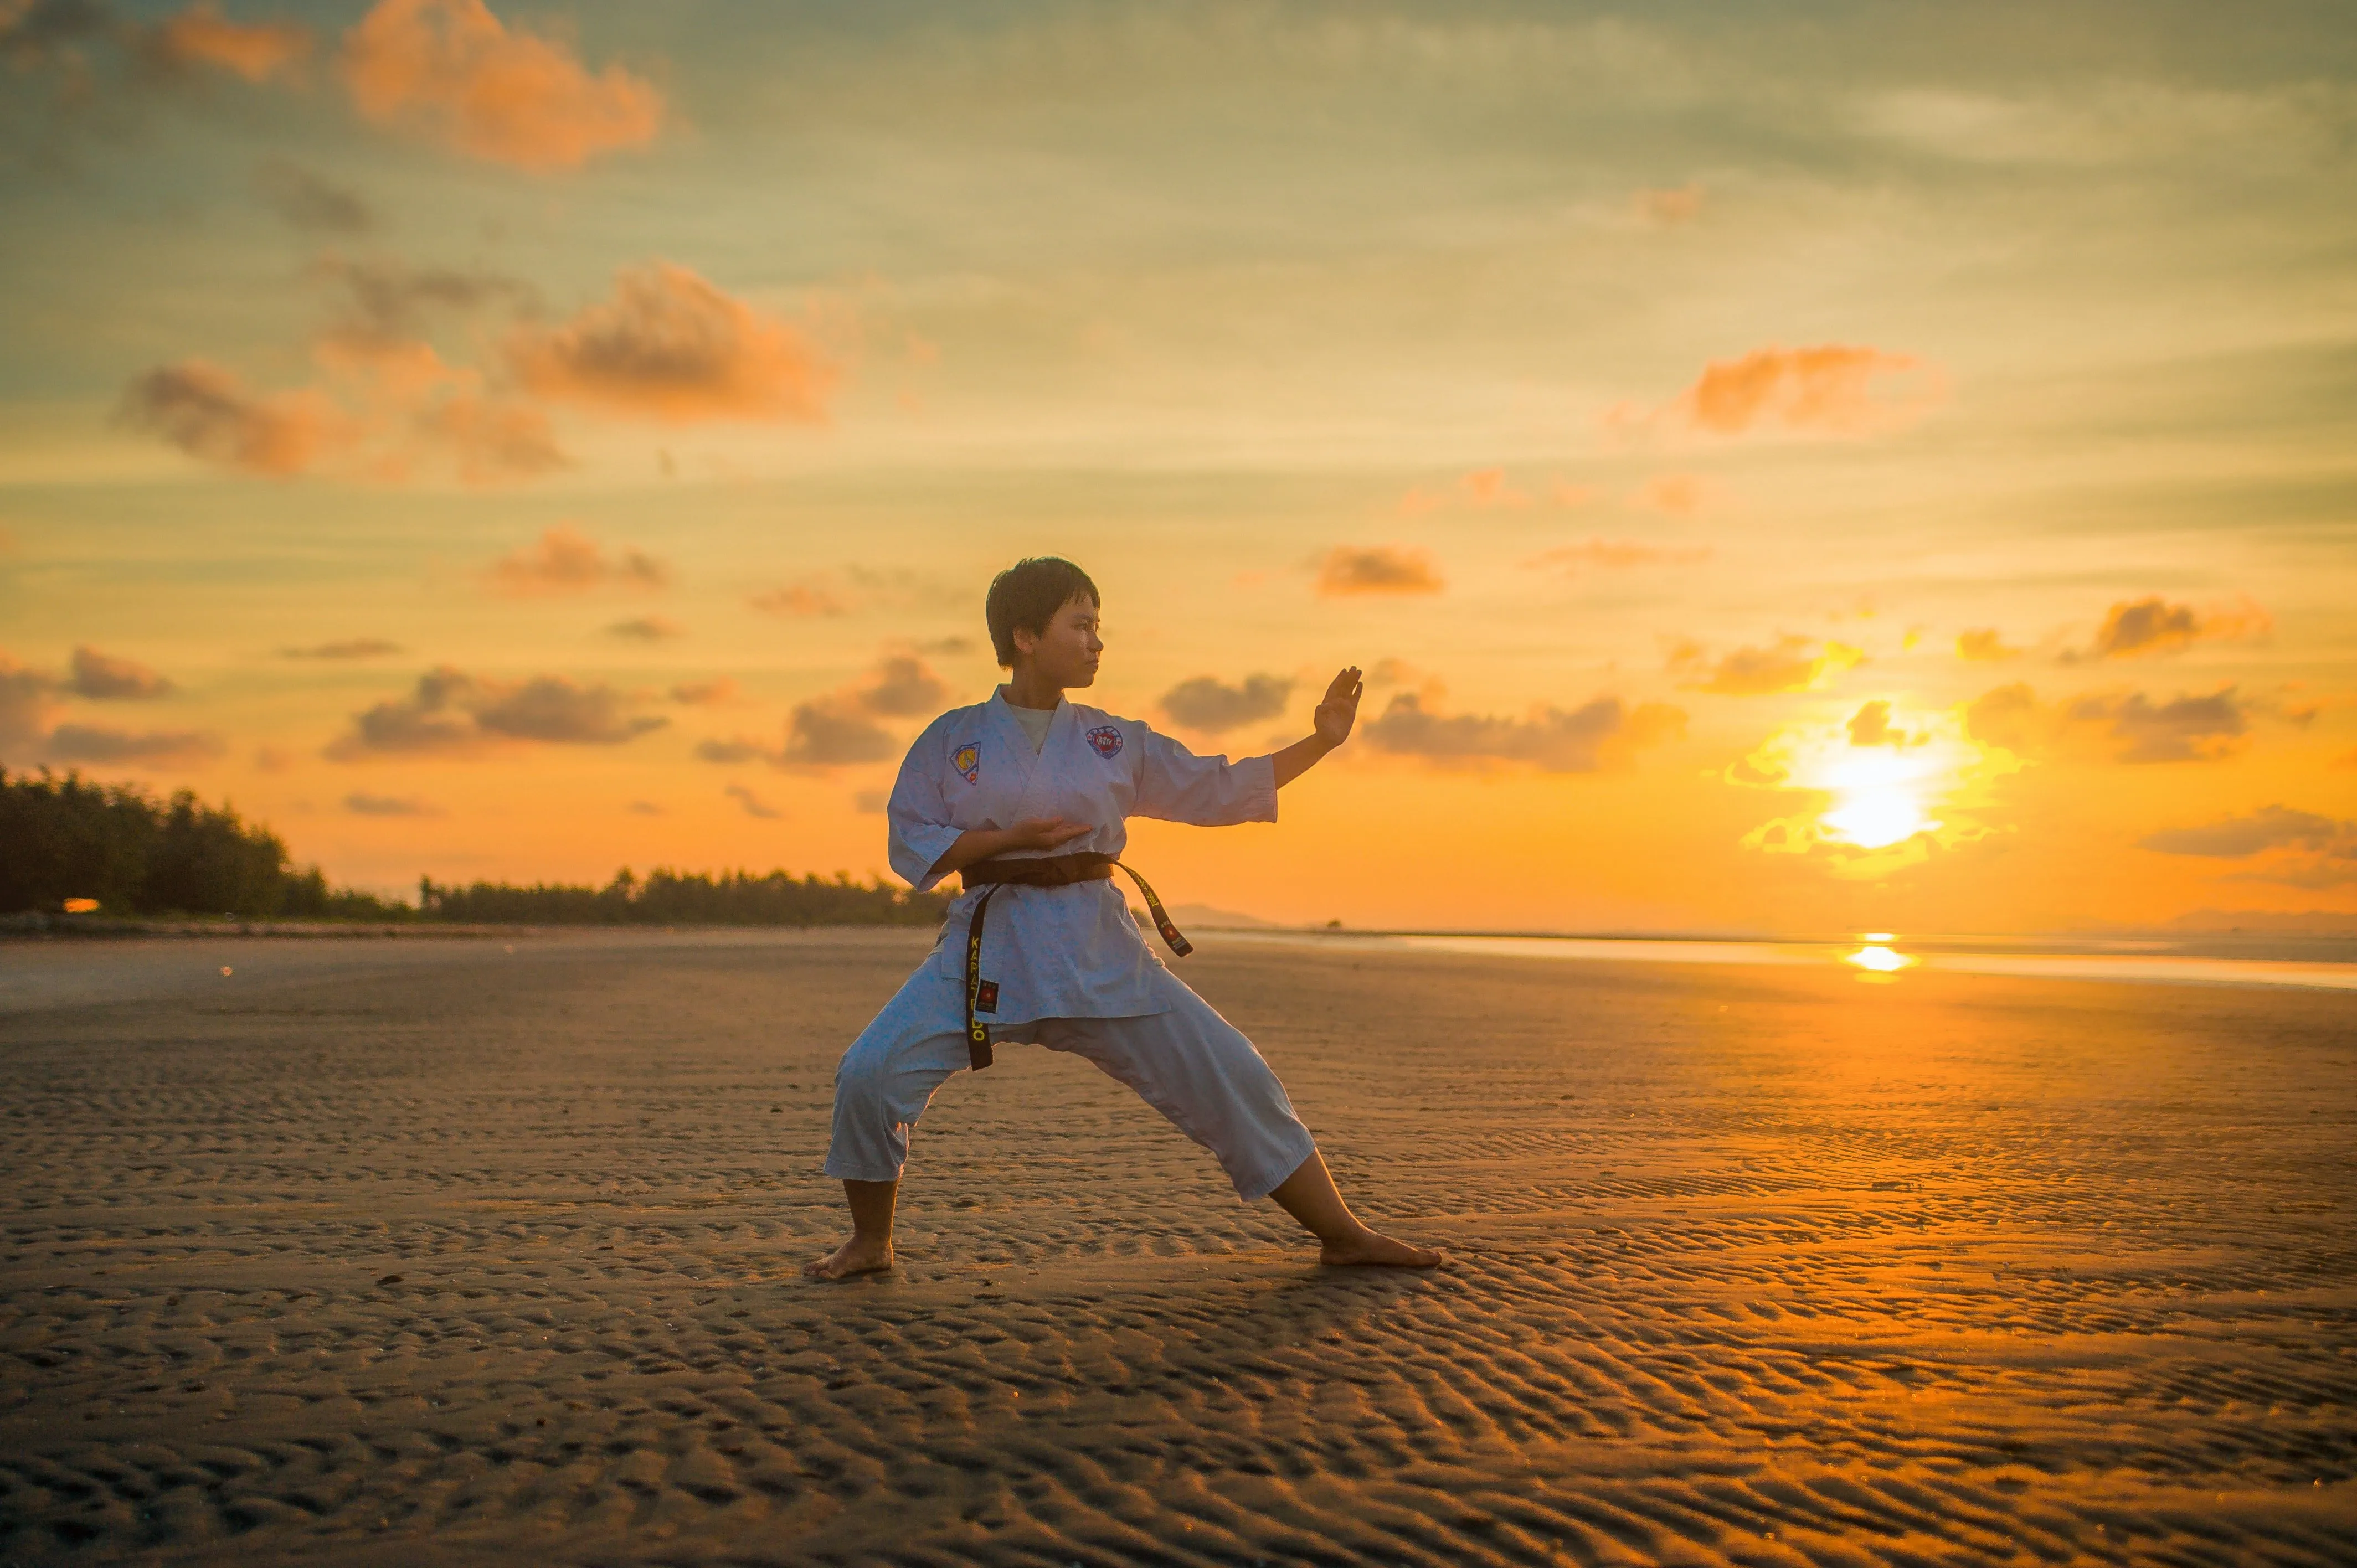 Karate student training on the beach